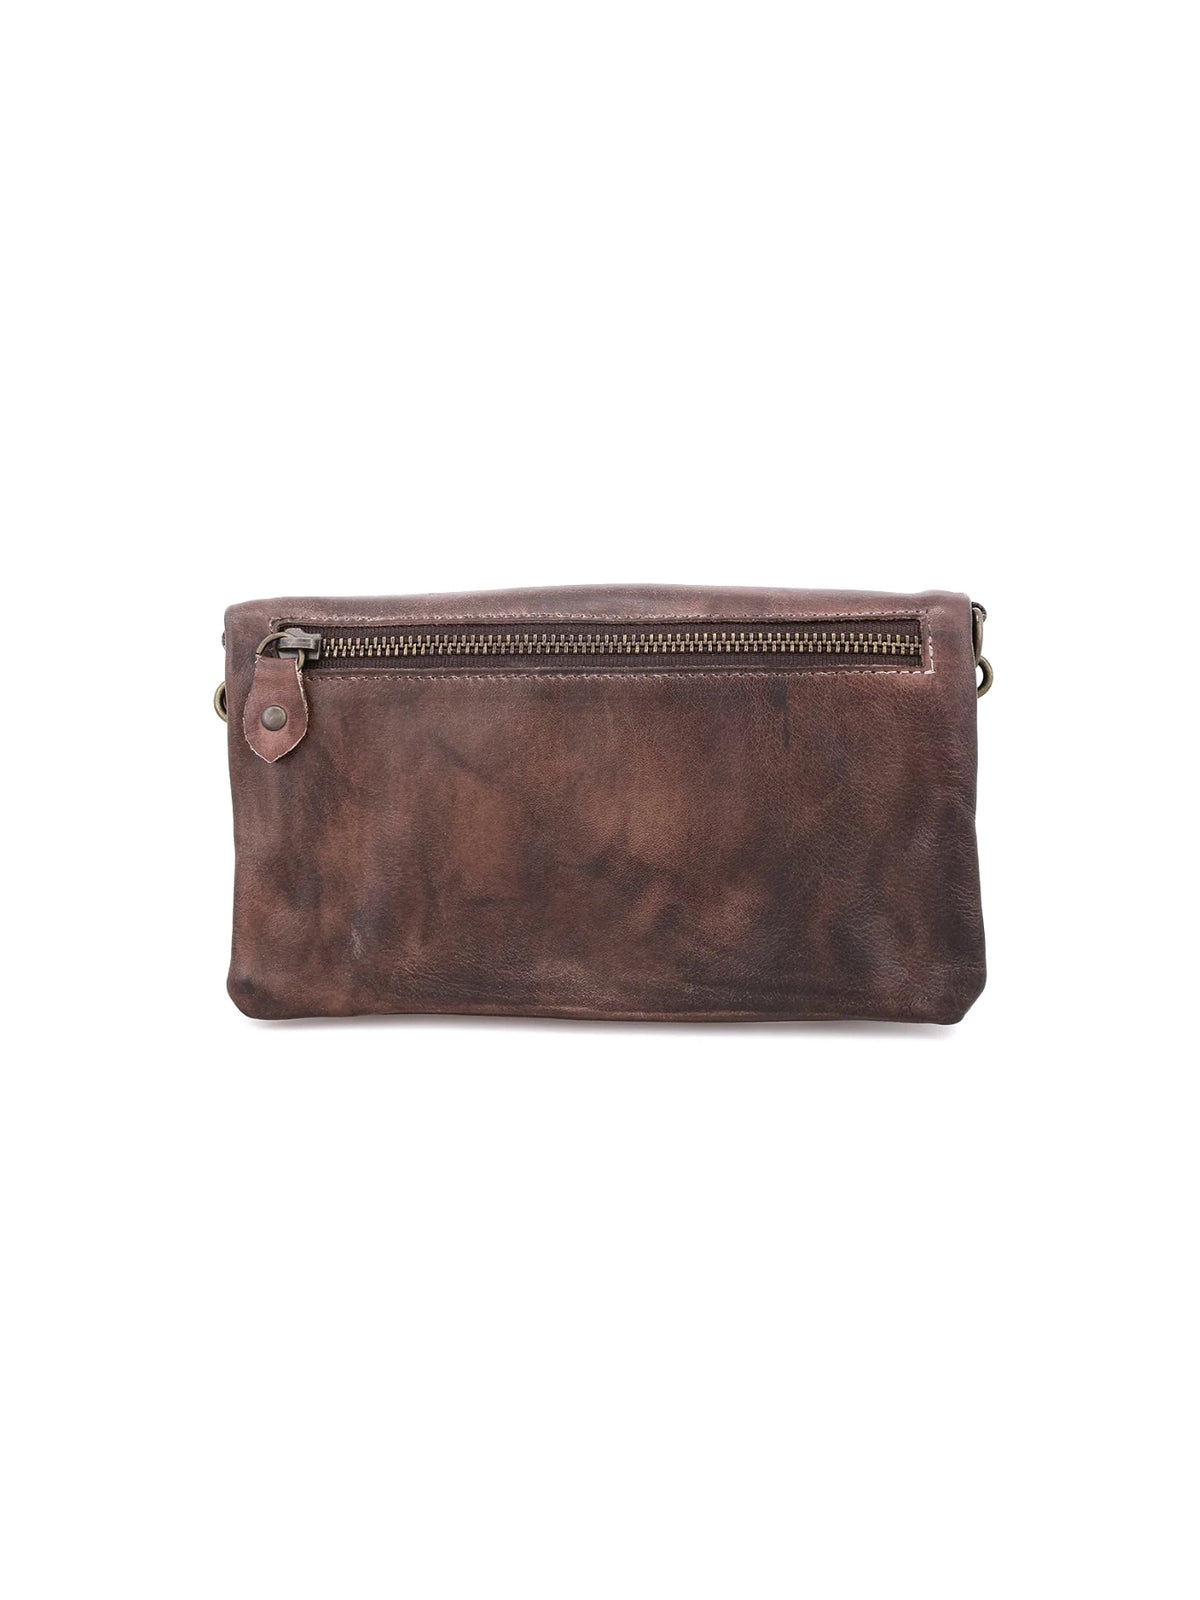 BEDSTU cadence convertible crossbody clutch wallet in teak rustic leather